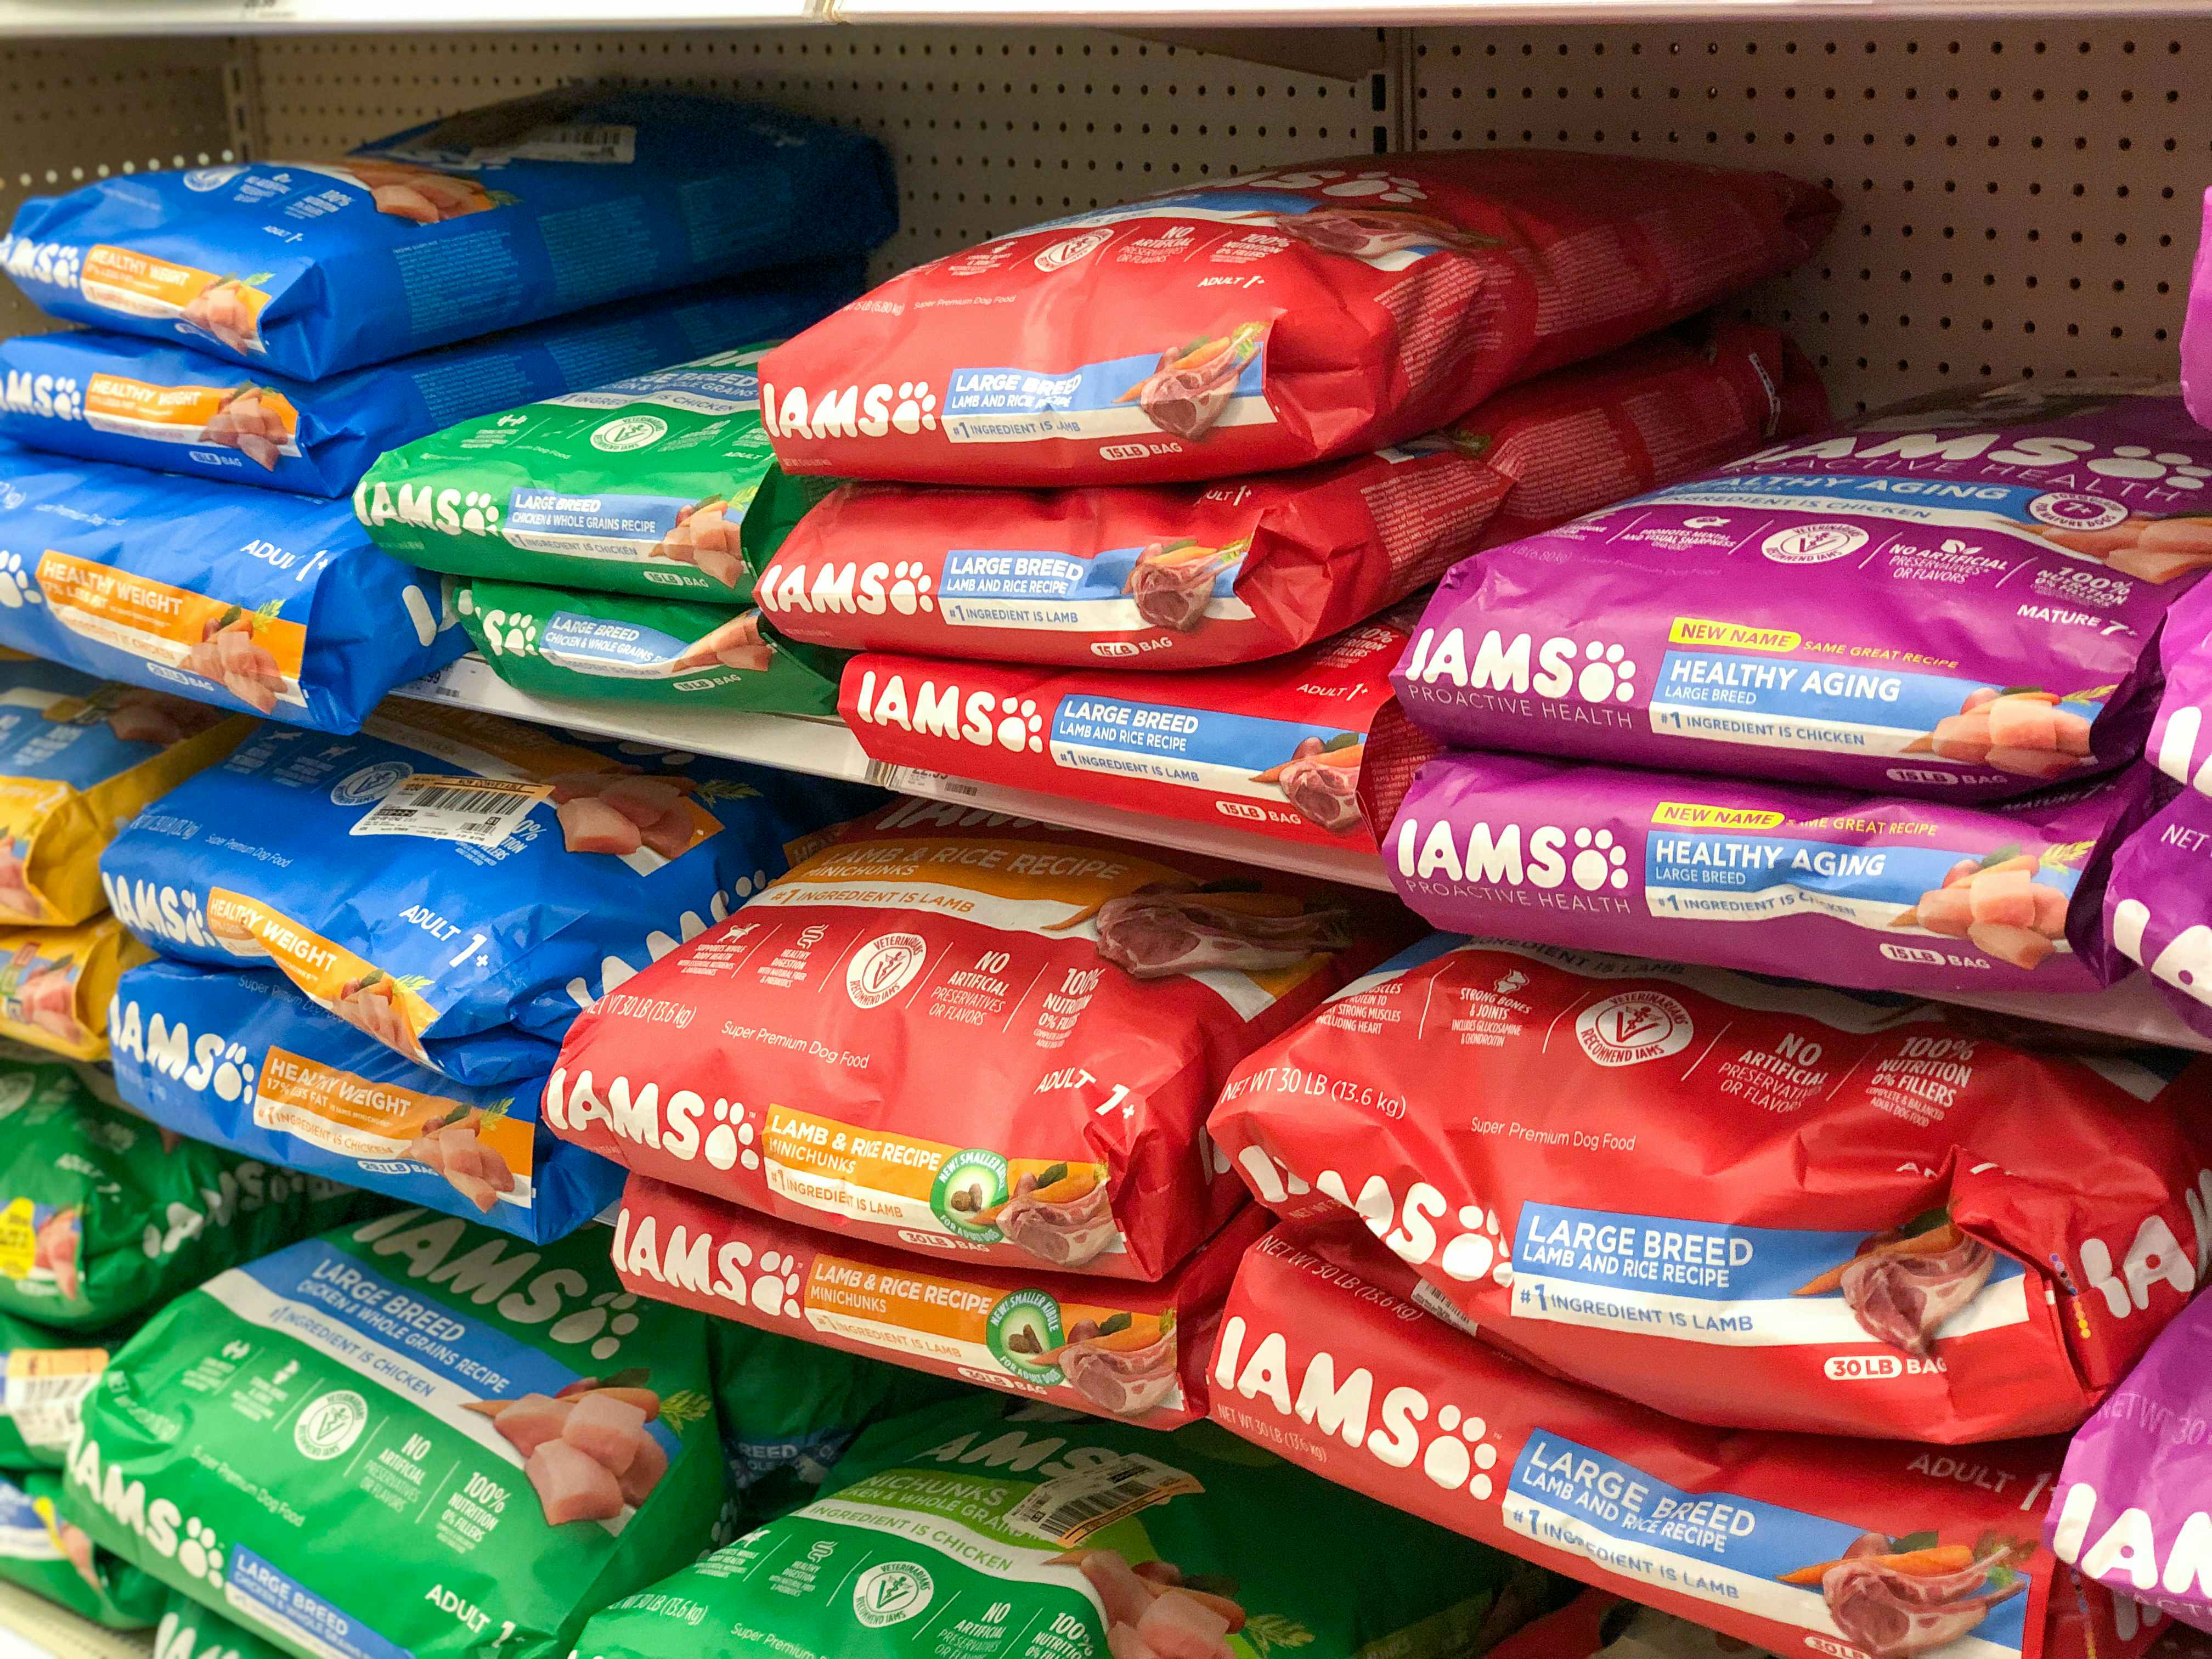 varieties of iams dry dog food on store shelves